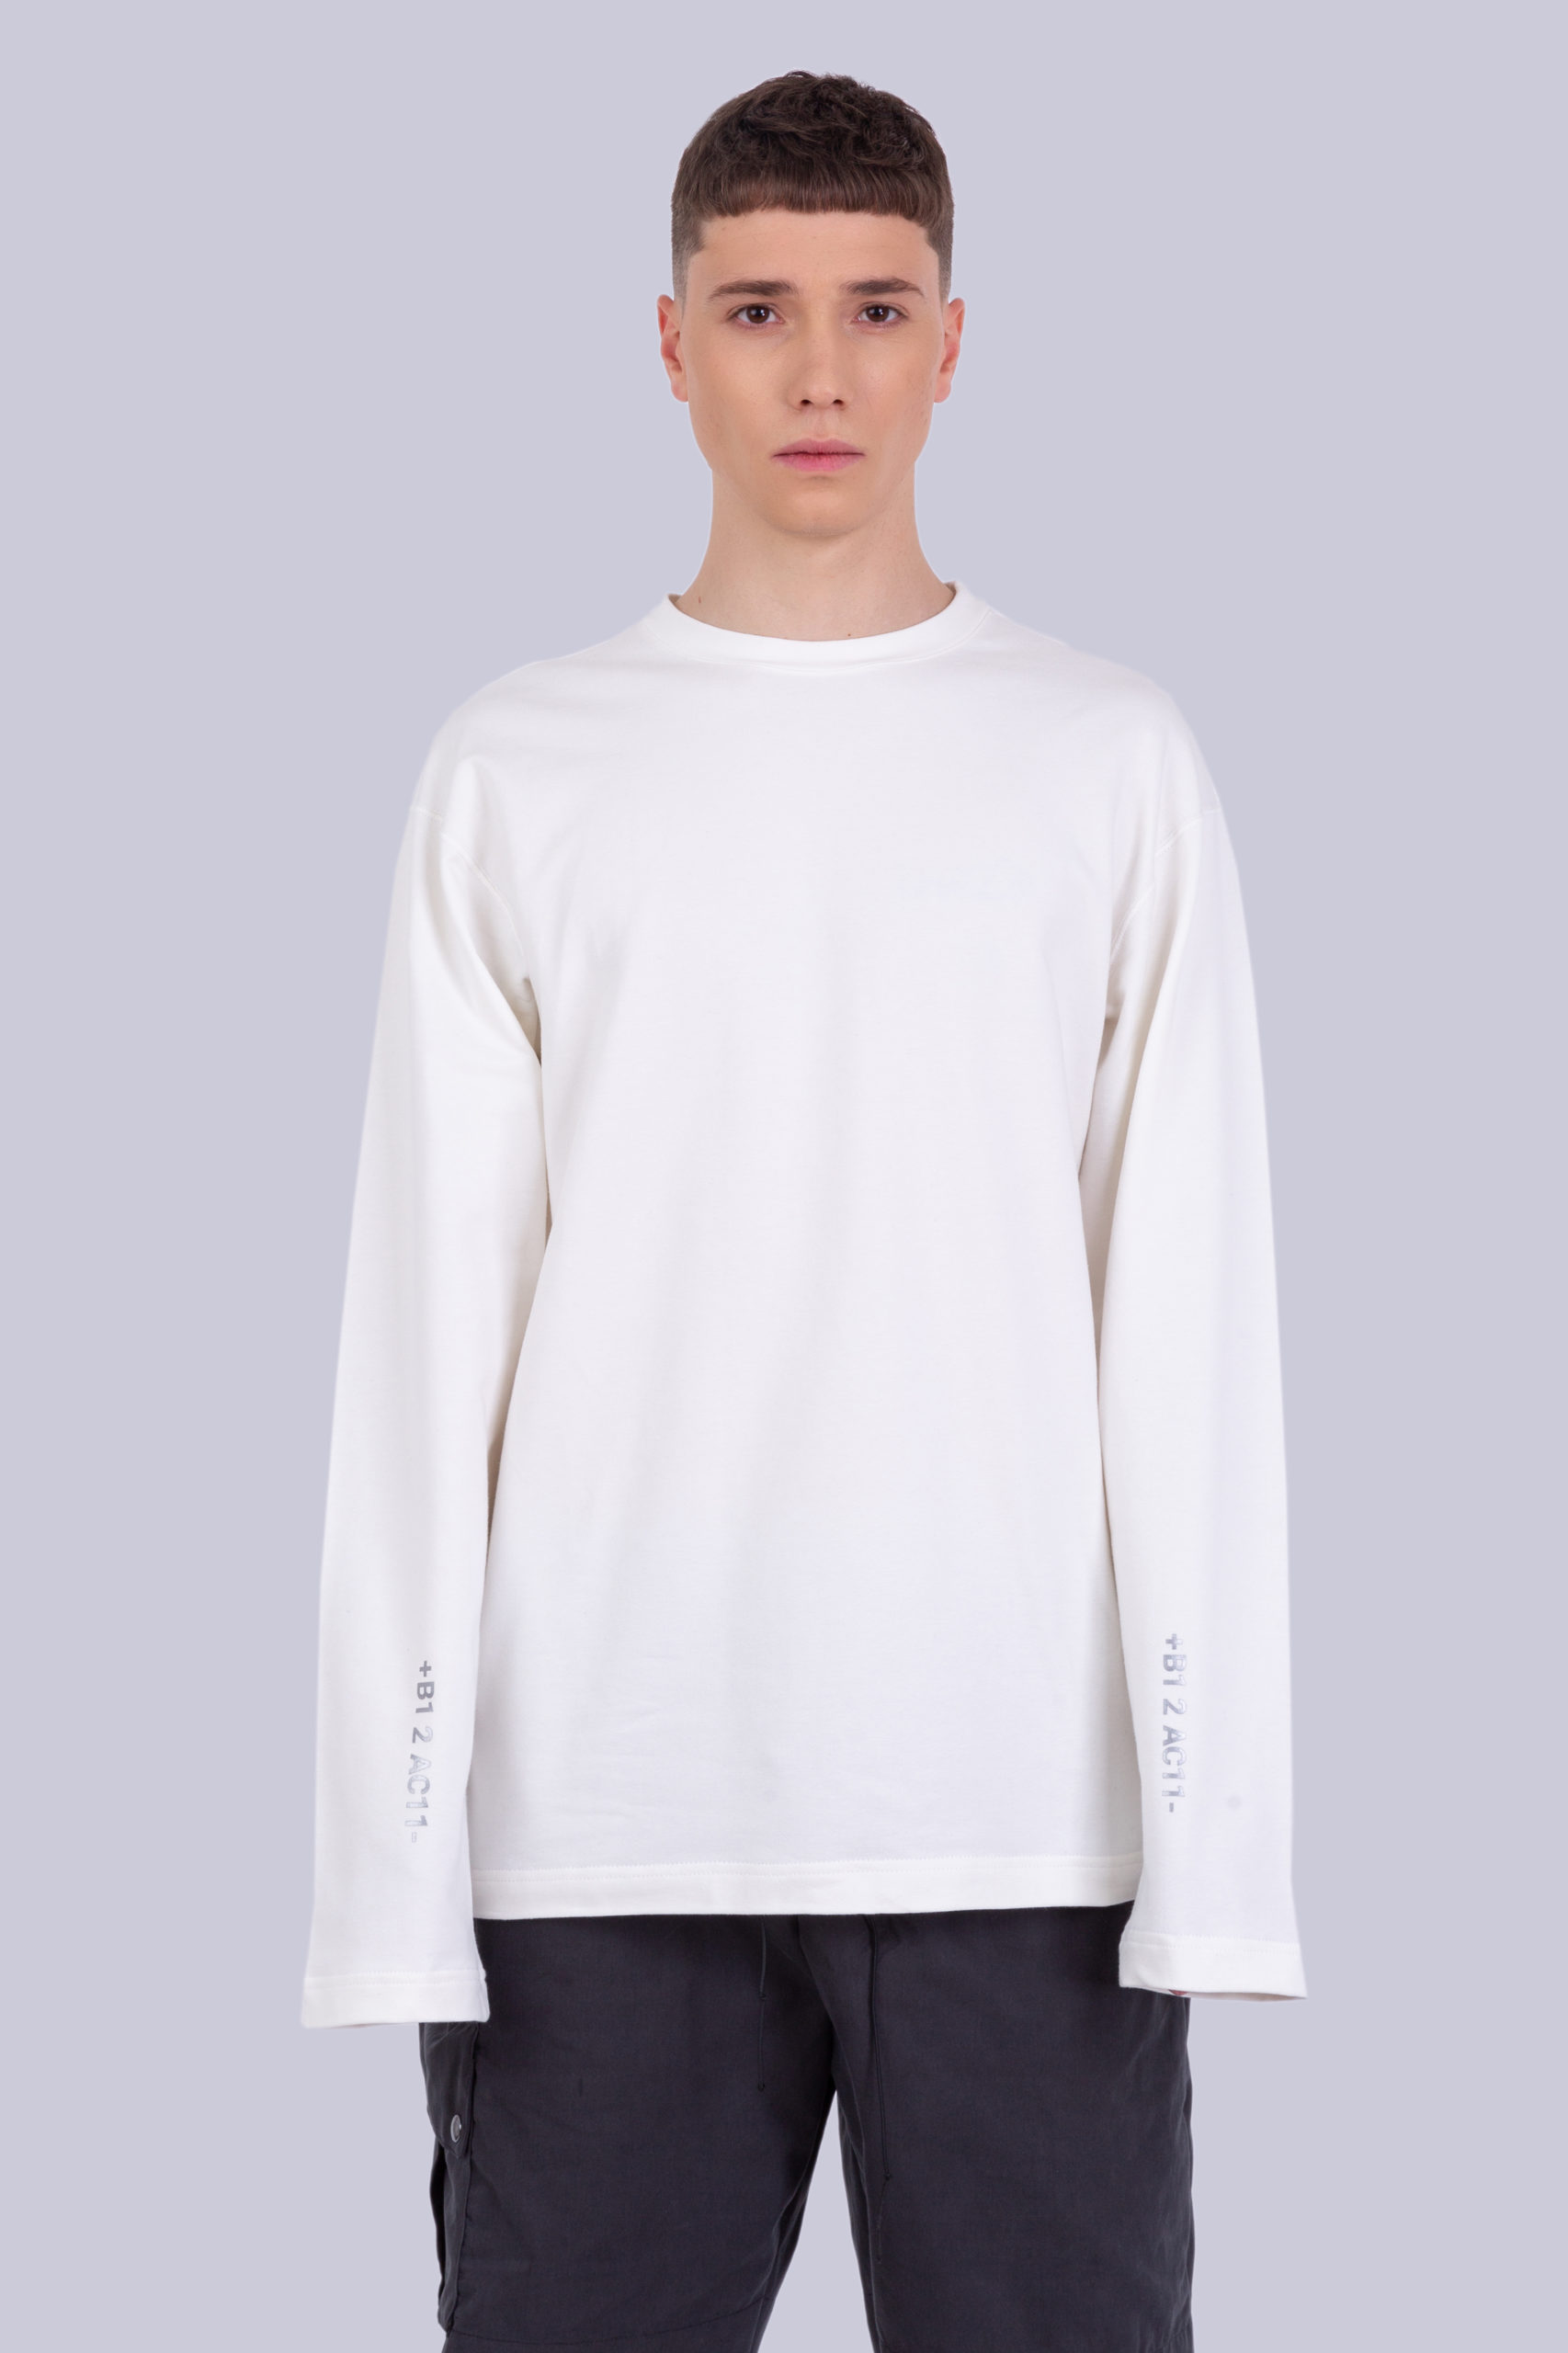 Shop Bulk White Long Sleeves T-SHIRT - NÉACODE